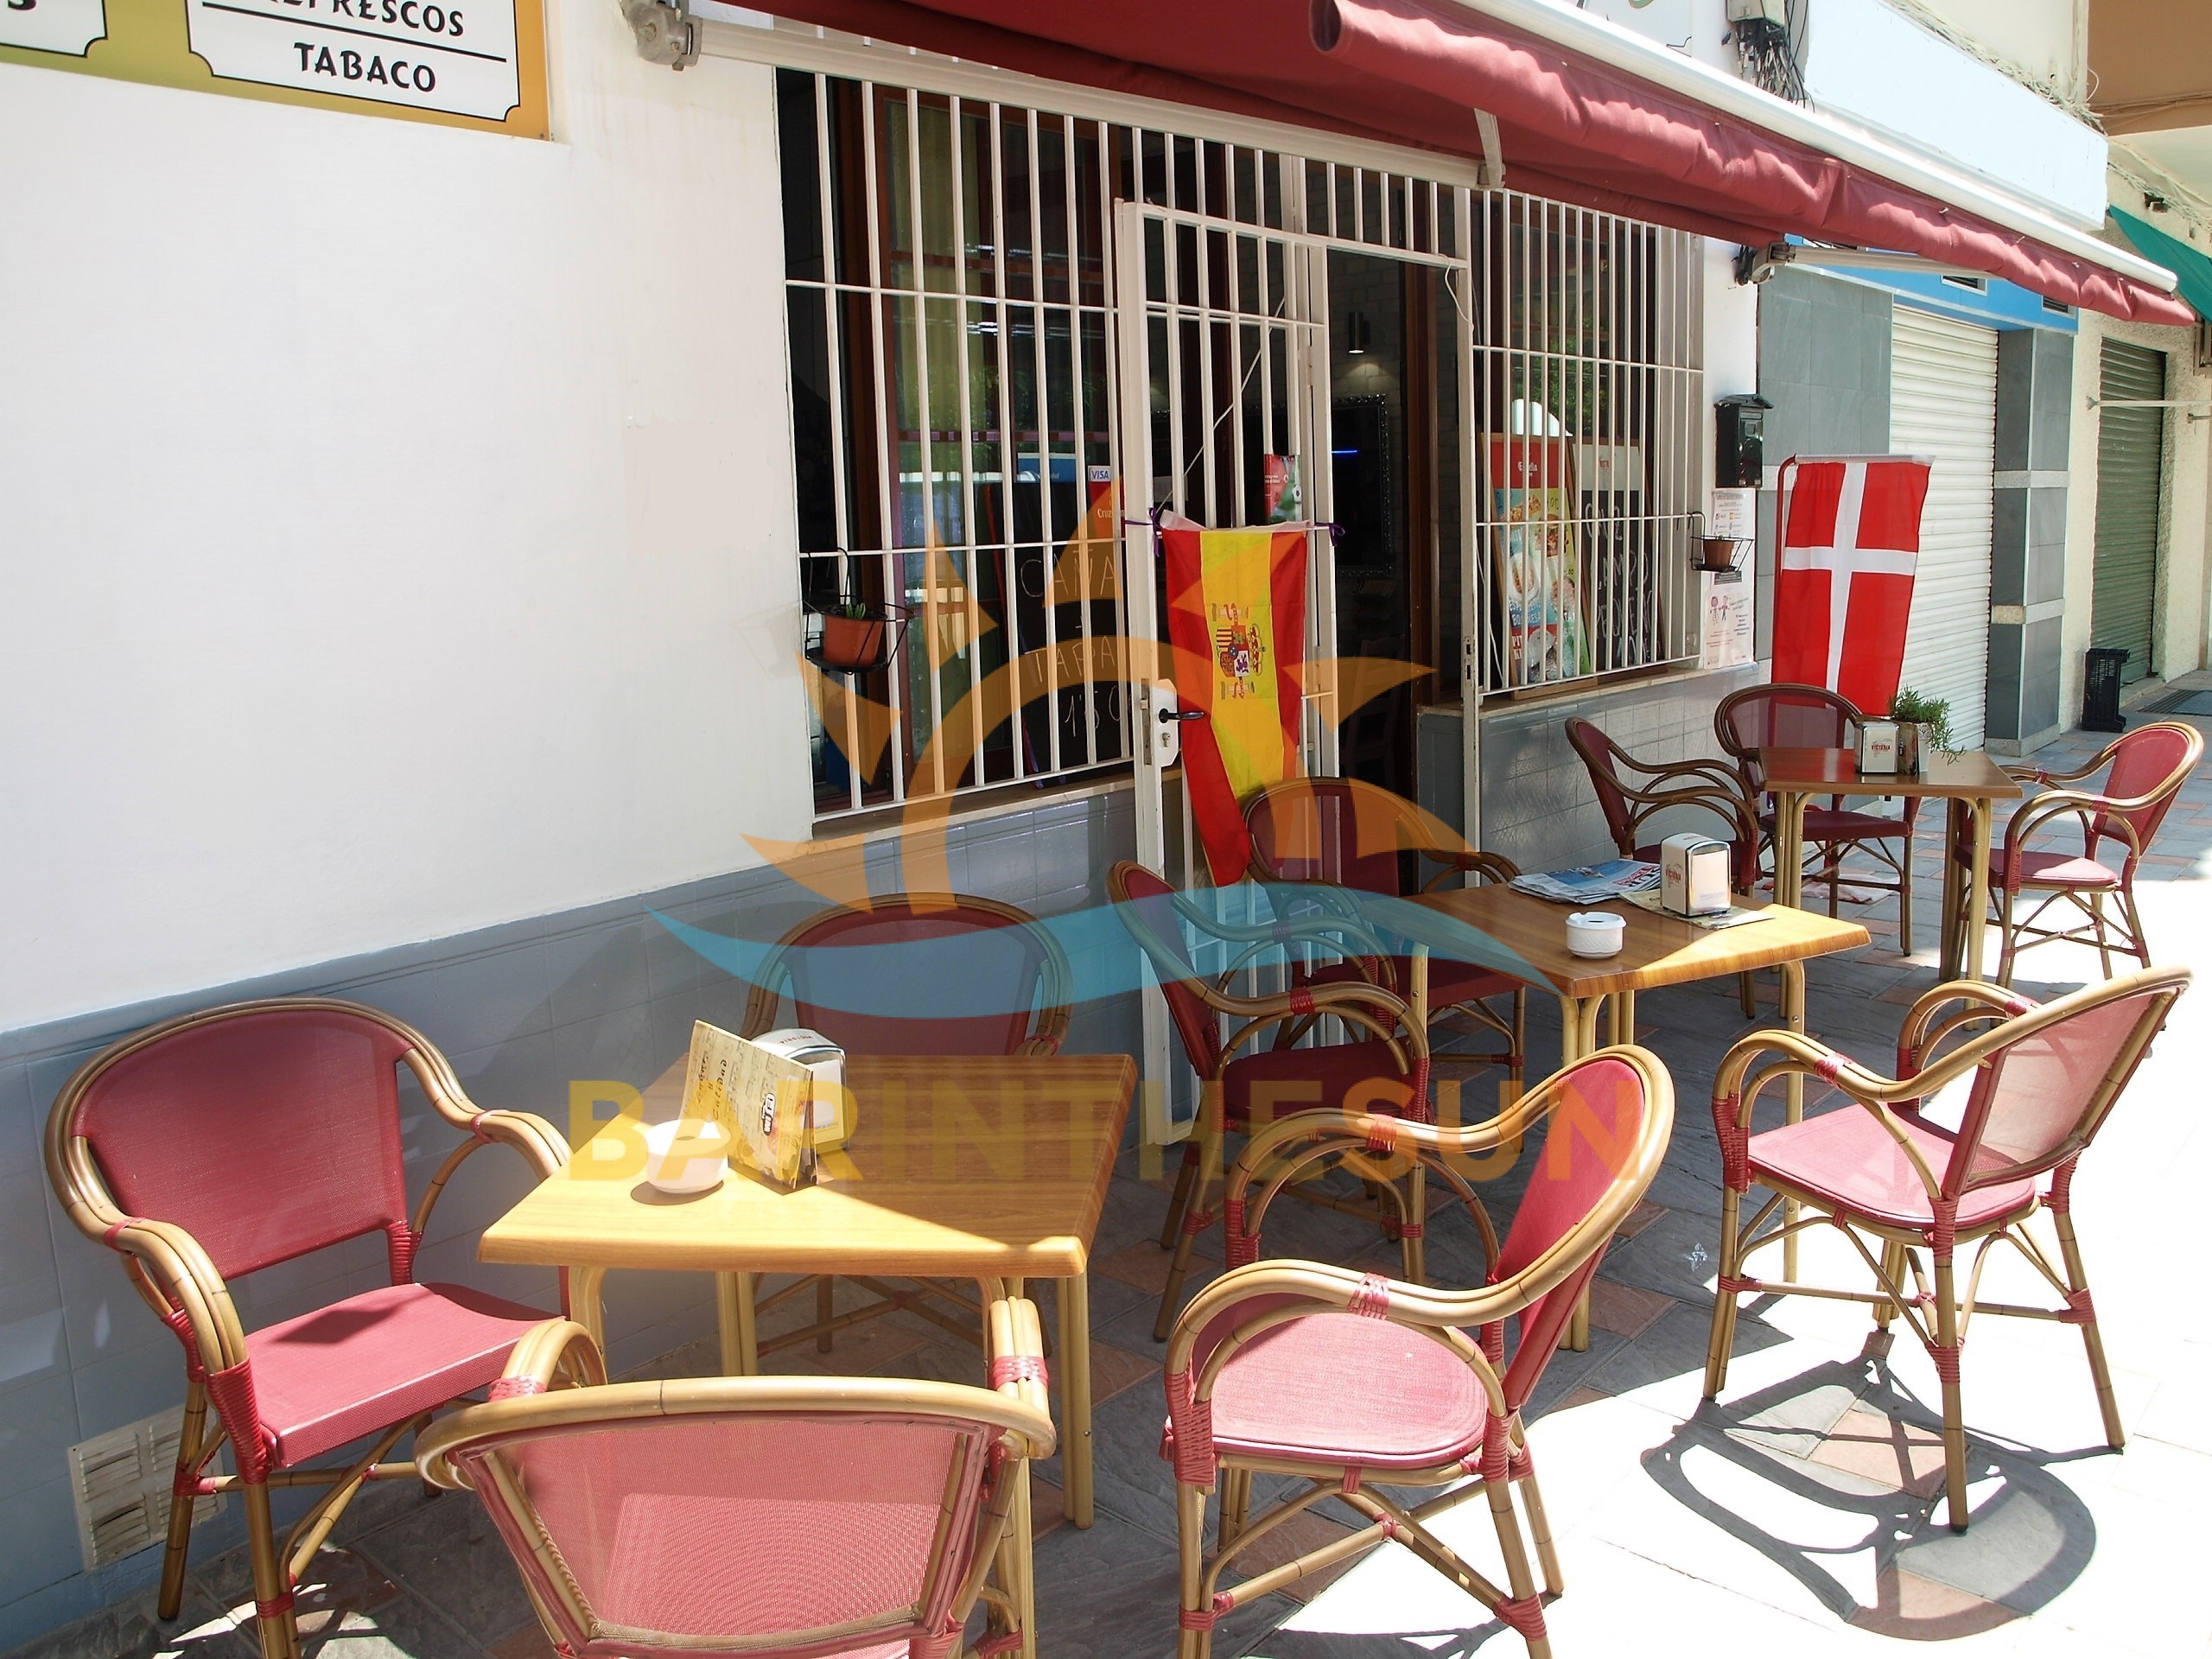 Costa Del Sol Cafe Bars For Sale, Fuengirola Cafe Bars For Sale